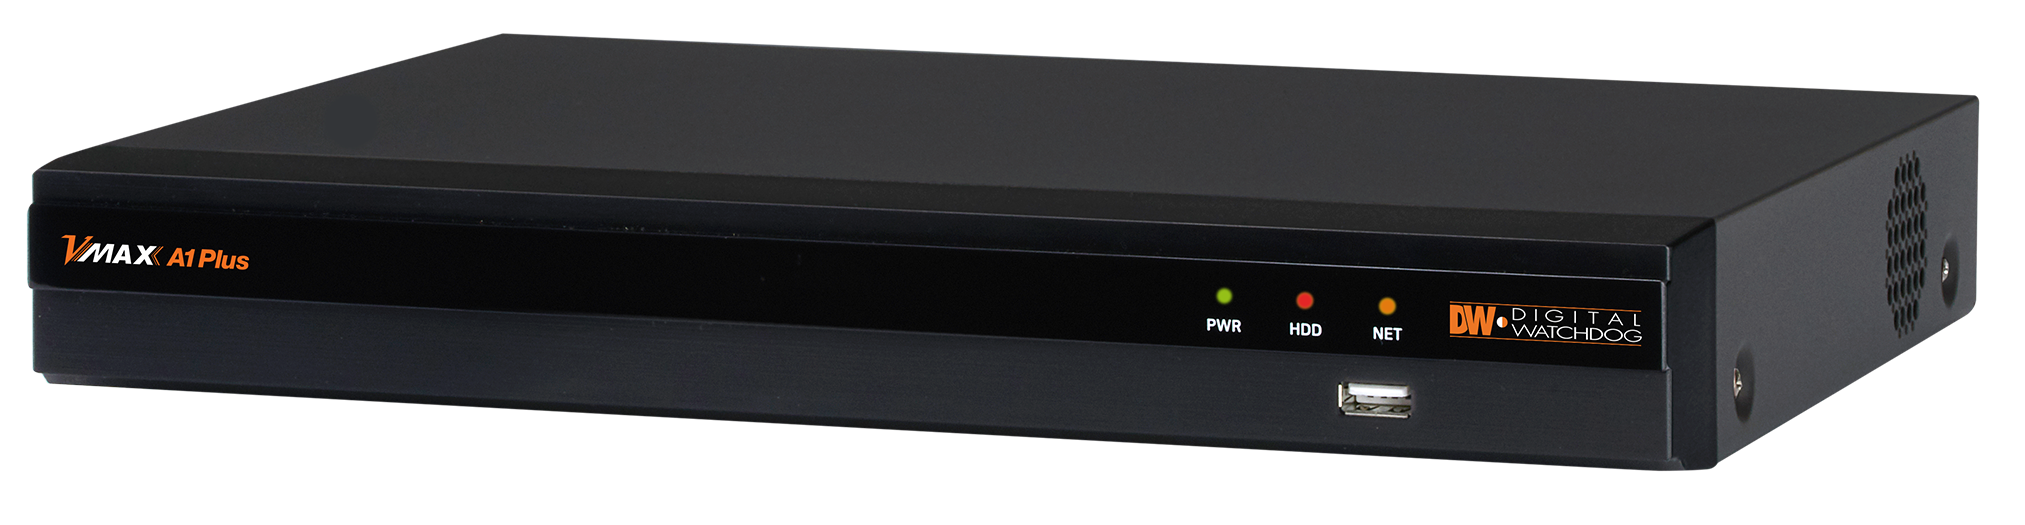 Digital Watchdog DW-VA1P86T  UHDoC - DVR 8ch 8 Channel Universal HD Over Coax DVR